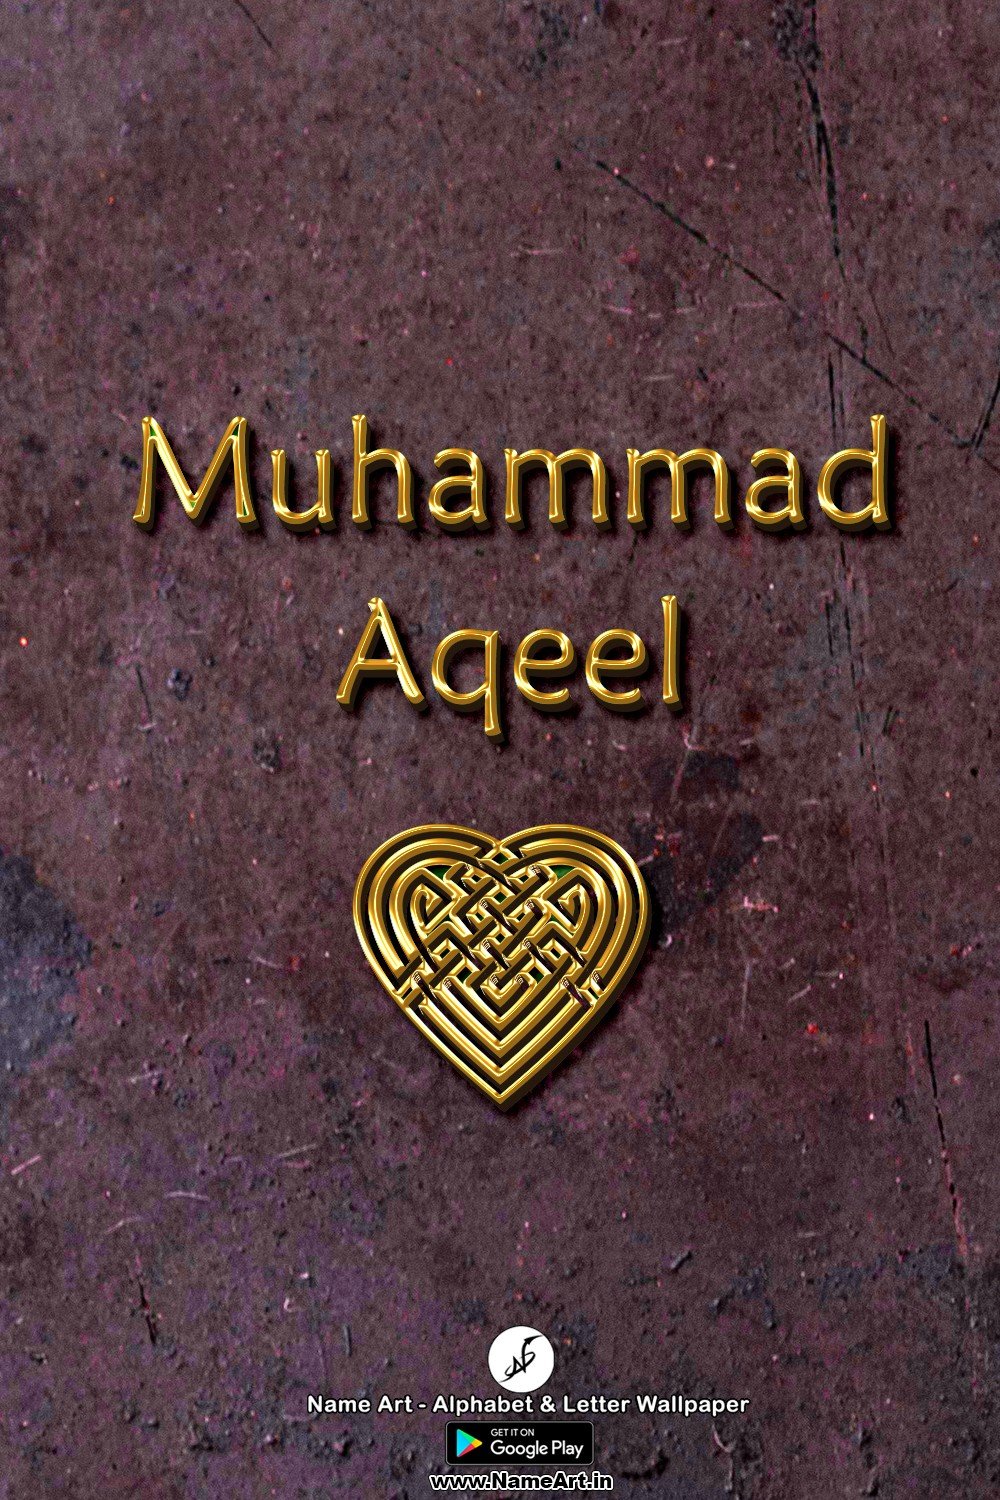 Muhammad Aqeel | Whatsapp Status Muhammad Aqeel || Happy Birthday To You !! | Muhammad Aqeel Whatsapp Status images |